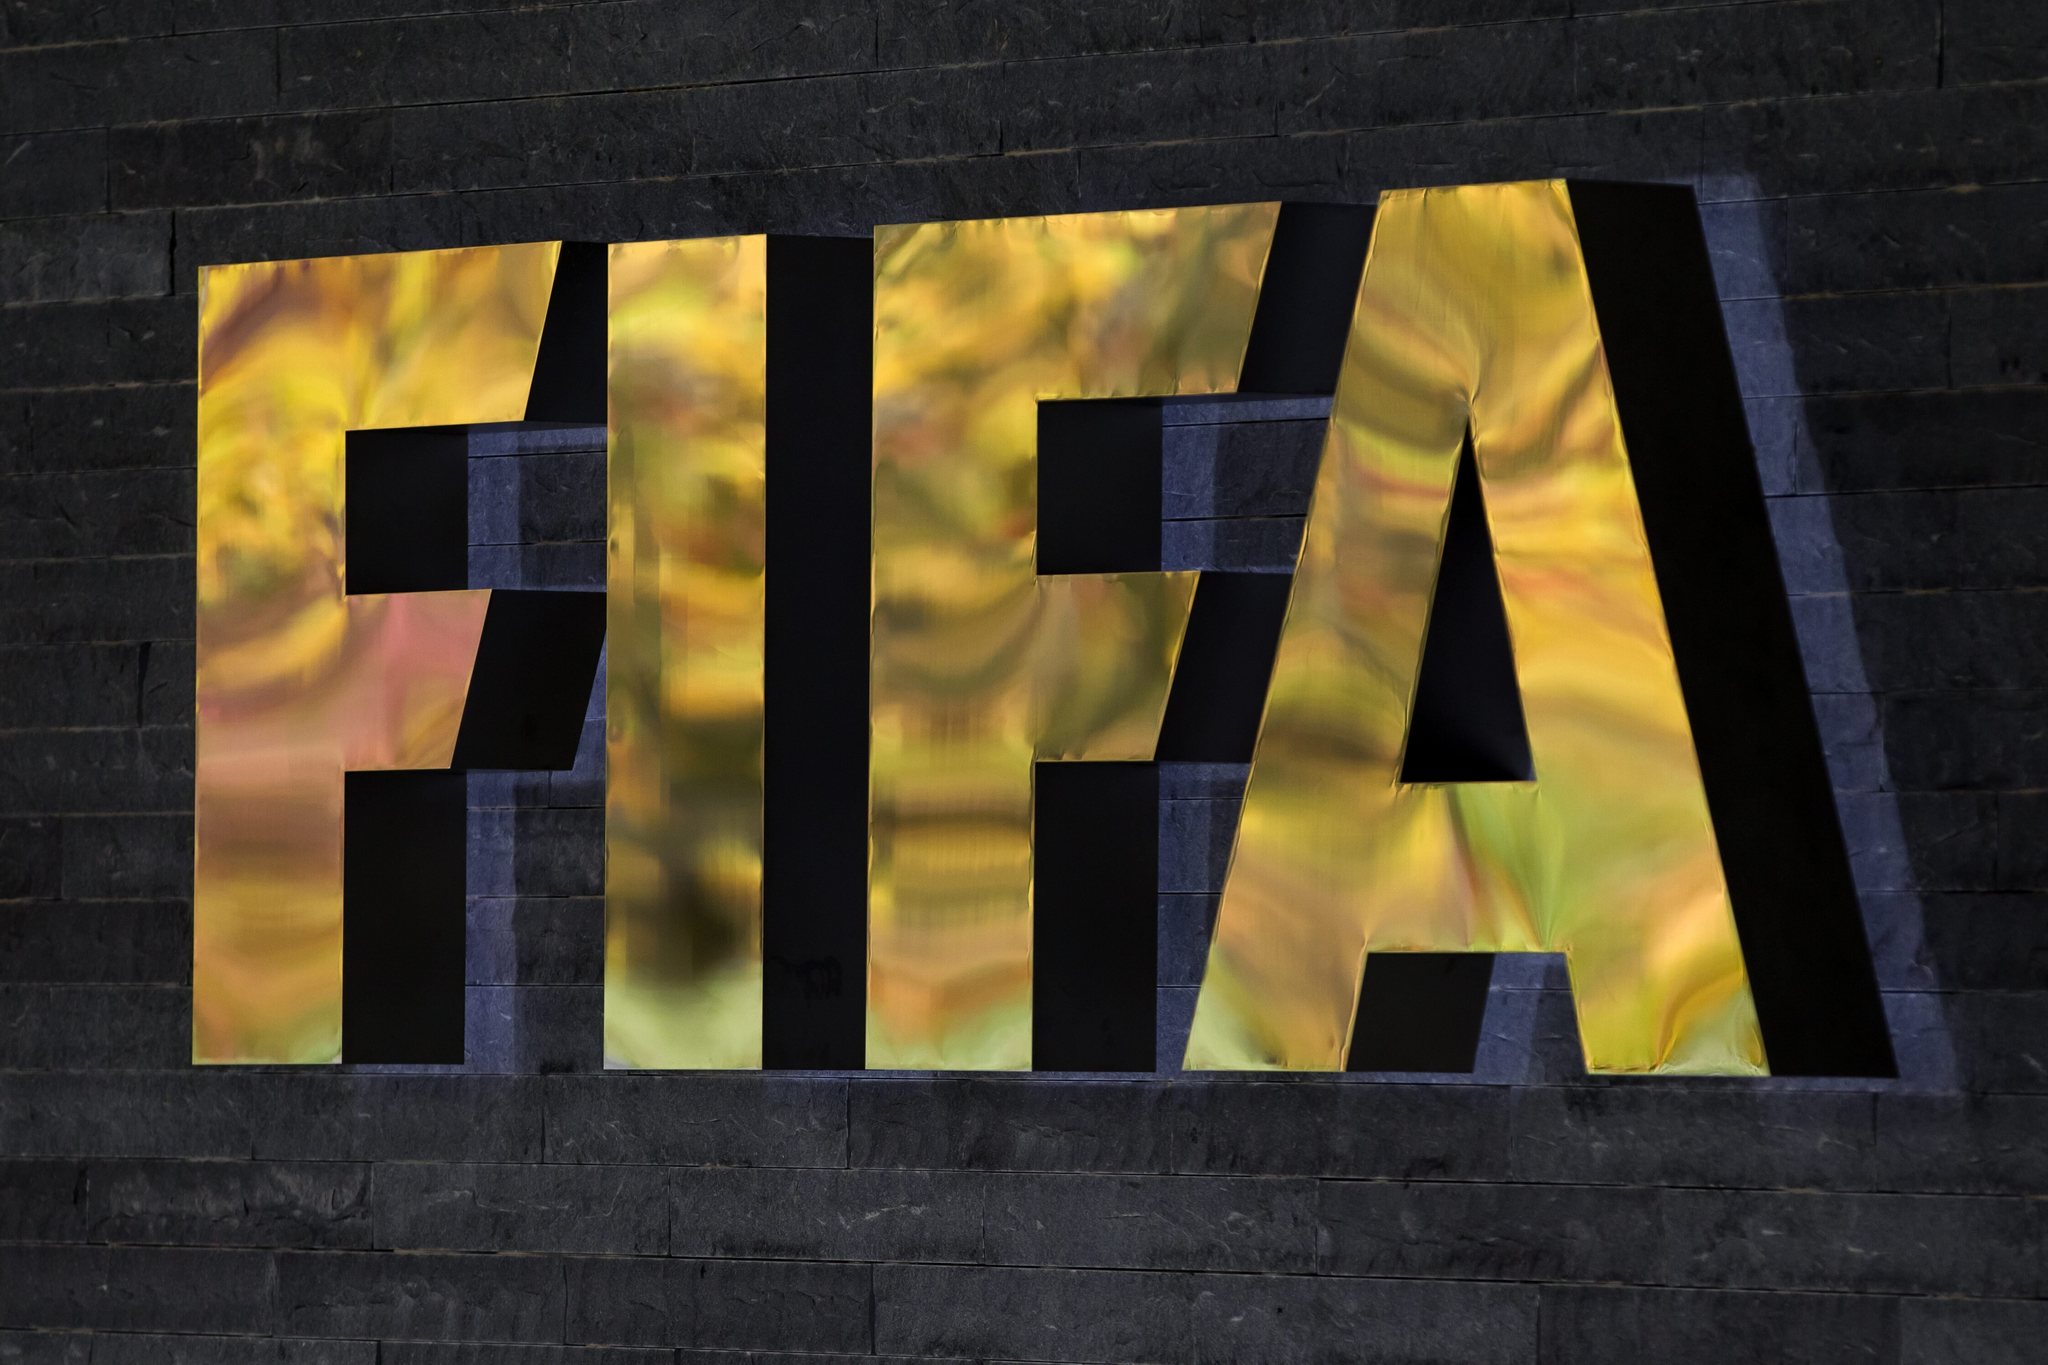 La FIFA se pronuncia sobre la sentencia del Tribunal de Justicia de la Unin Europea sobre la Superliga